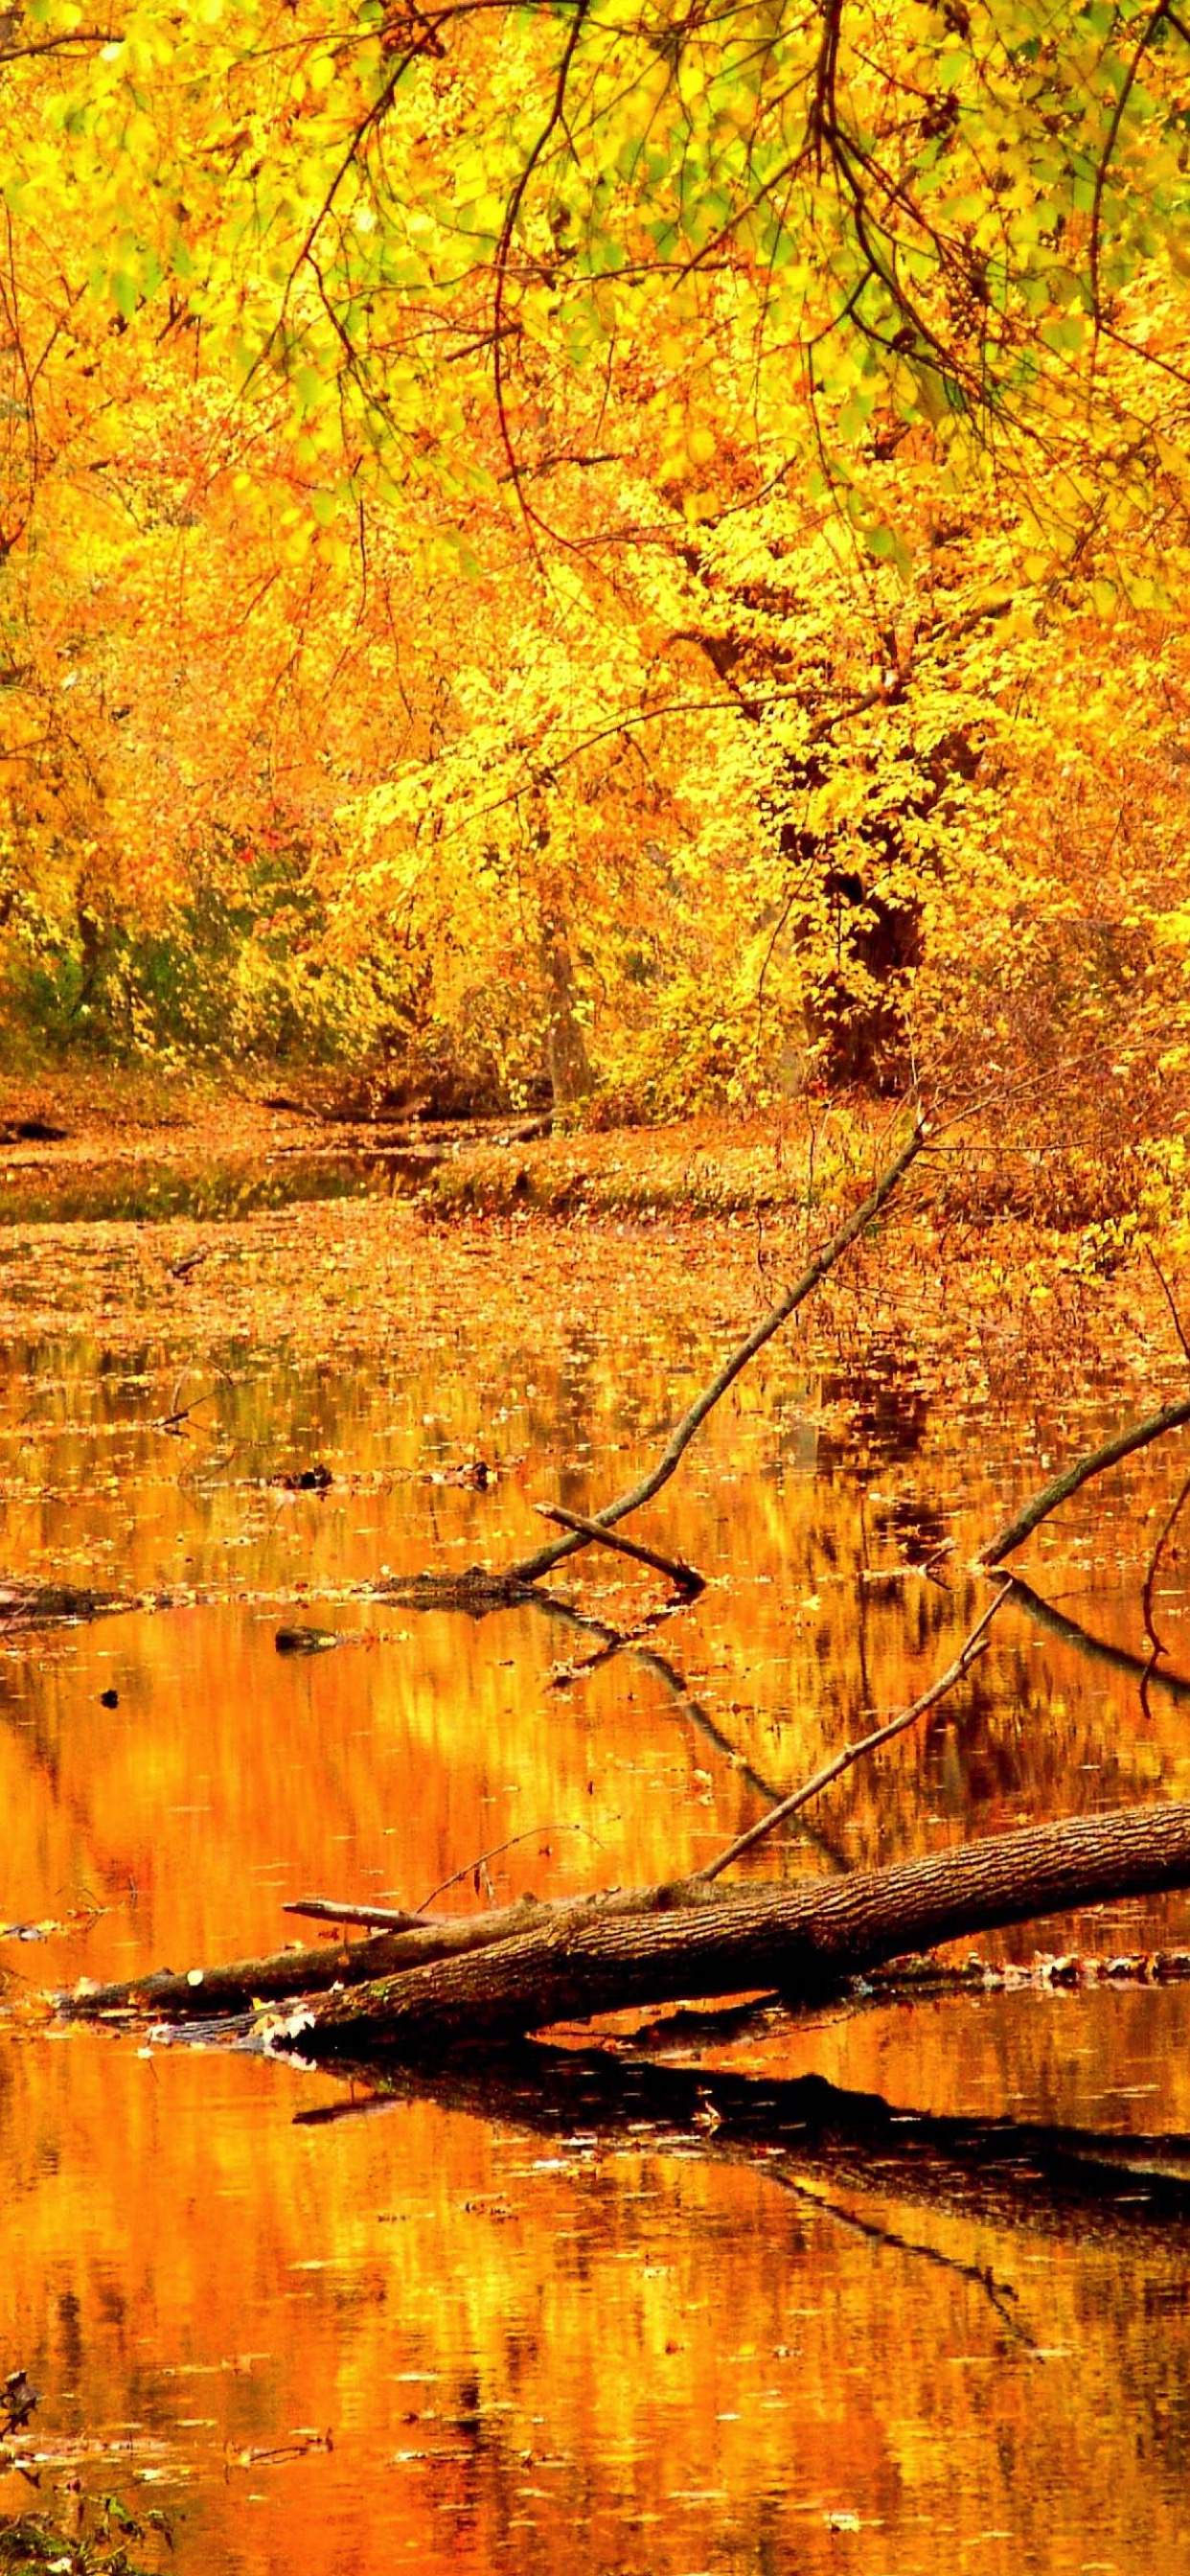 Landscape yellow autumn leaves. wallpaper.sc iPhone XS Max